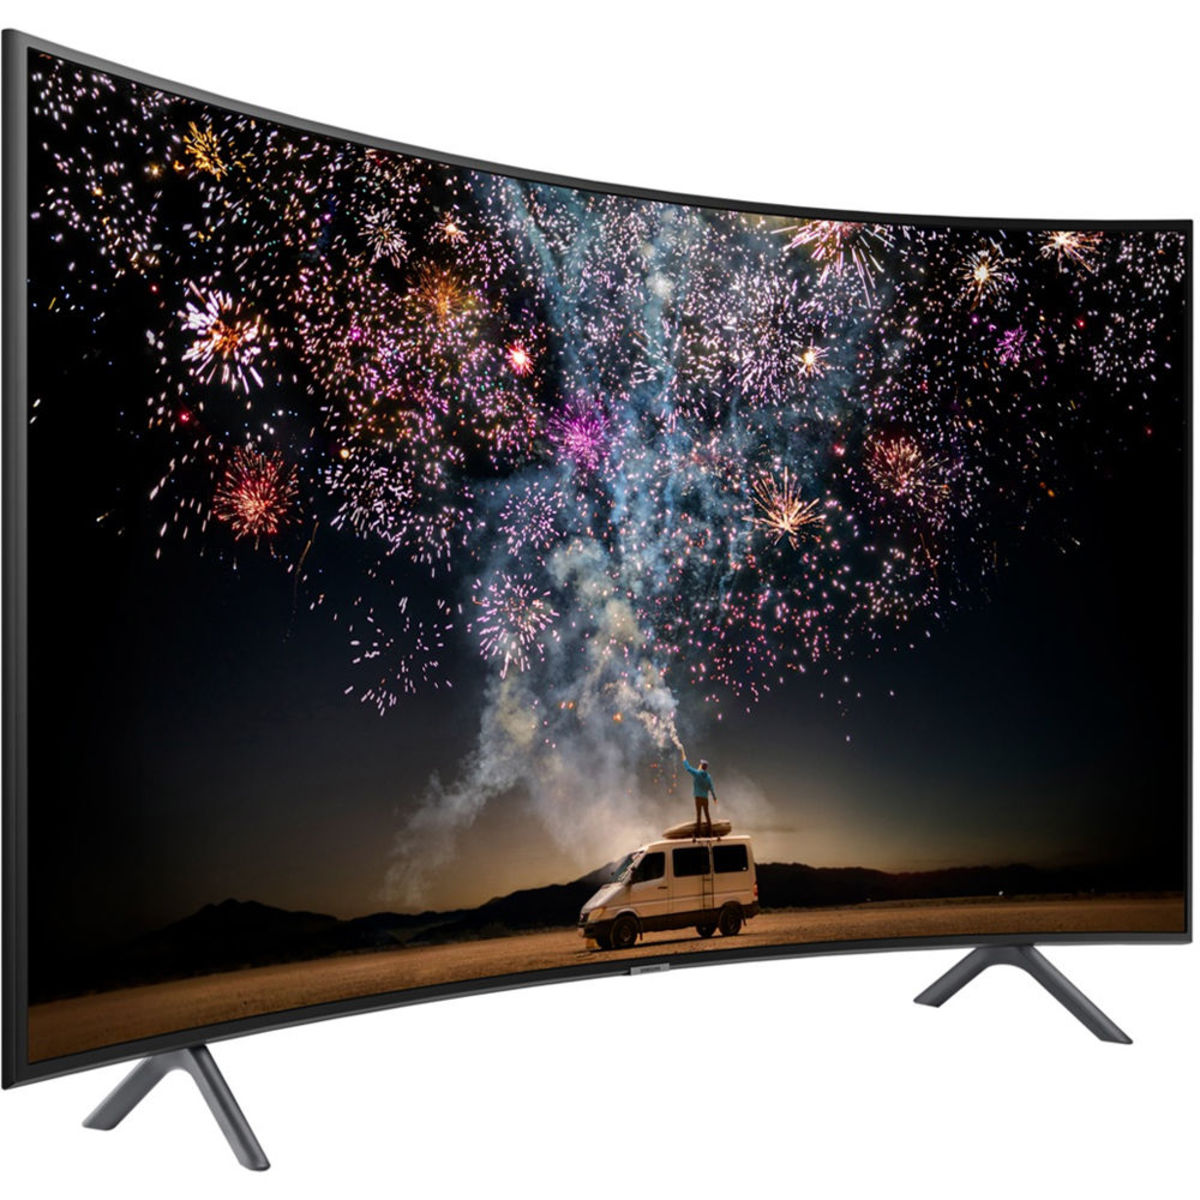 Samsung Curved Ultra HD Smart LED TV 49RU7300 49"